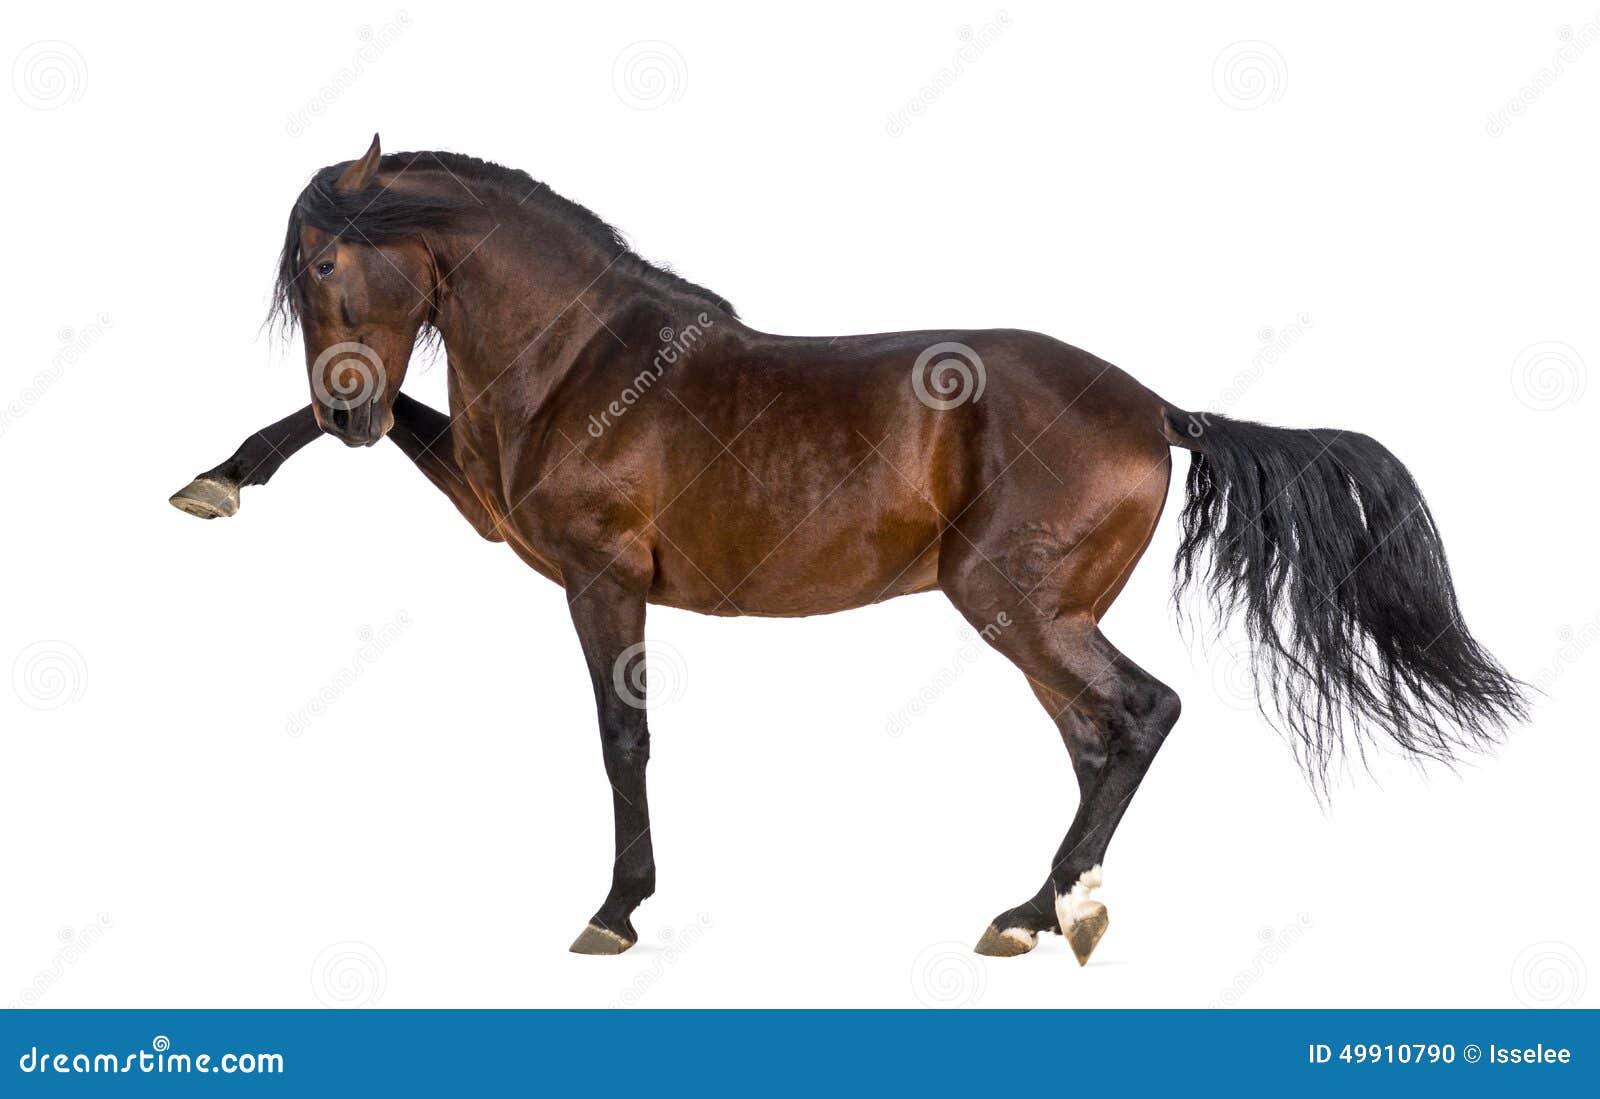 andalusian horse performing spanish walk